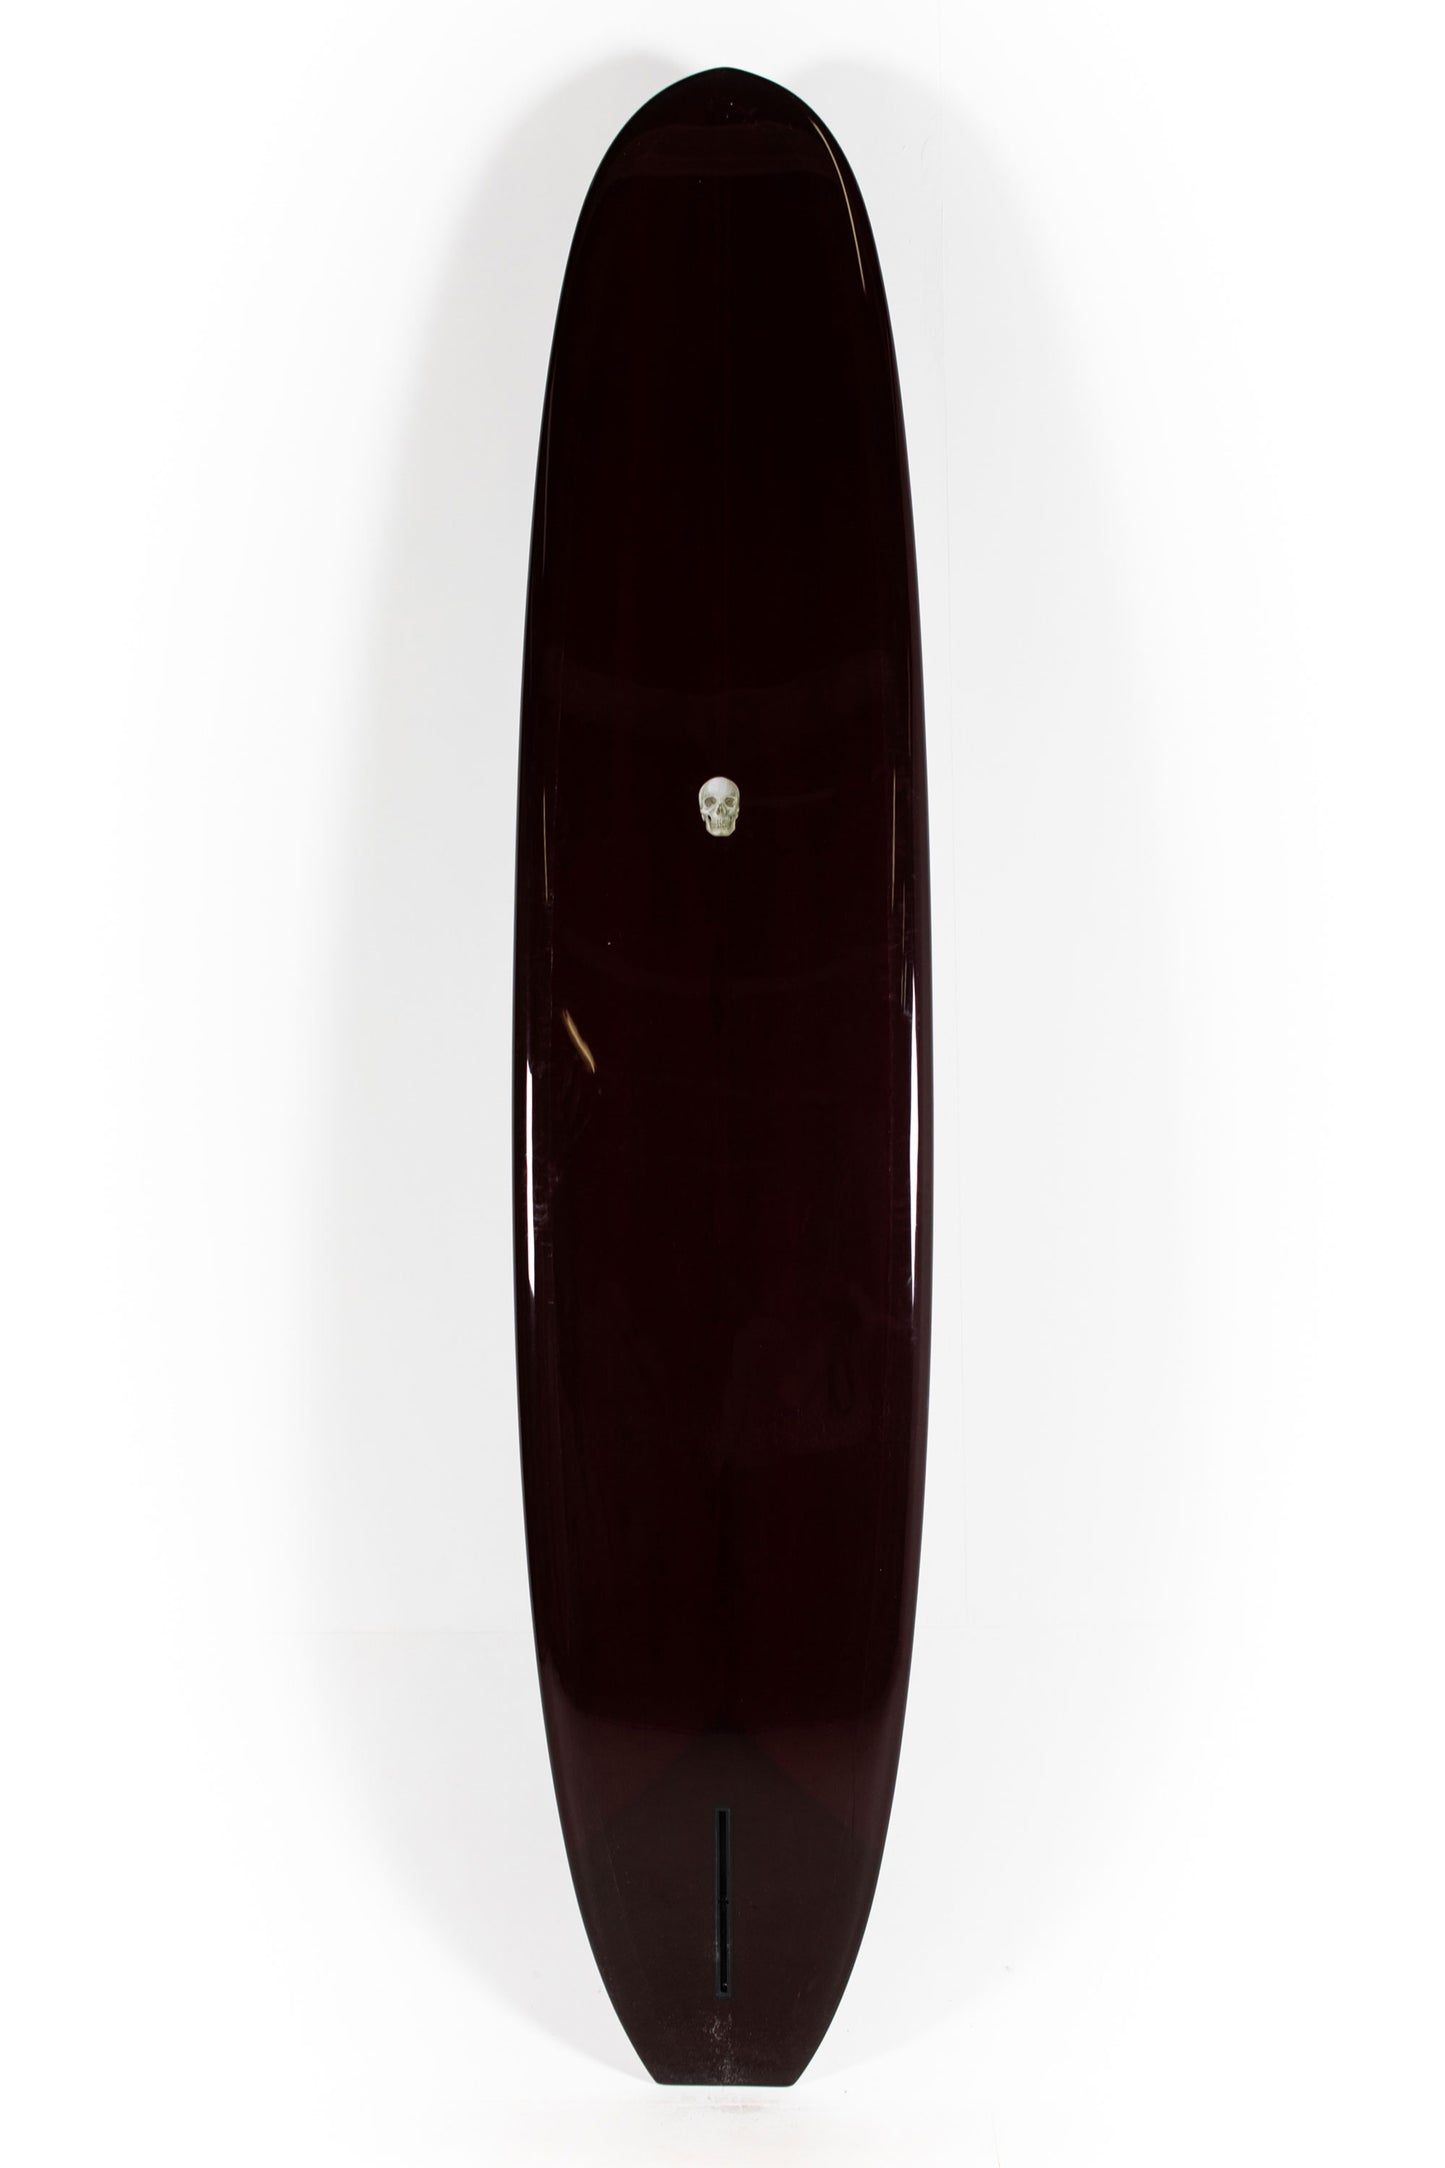 Pukas Surf Shop - Christenson Surfboard  - SCARLET BEGONIA by Chris Christenson - 9'7” x 23 3/8" x 2 29/32" - CX05220